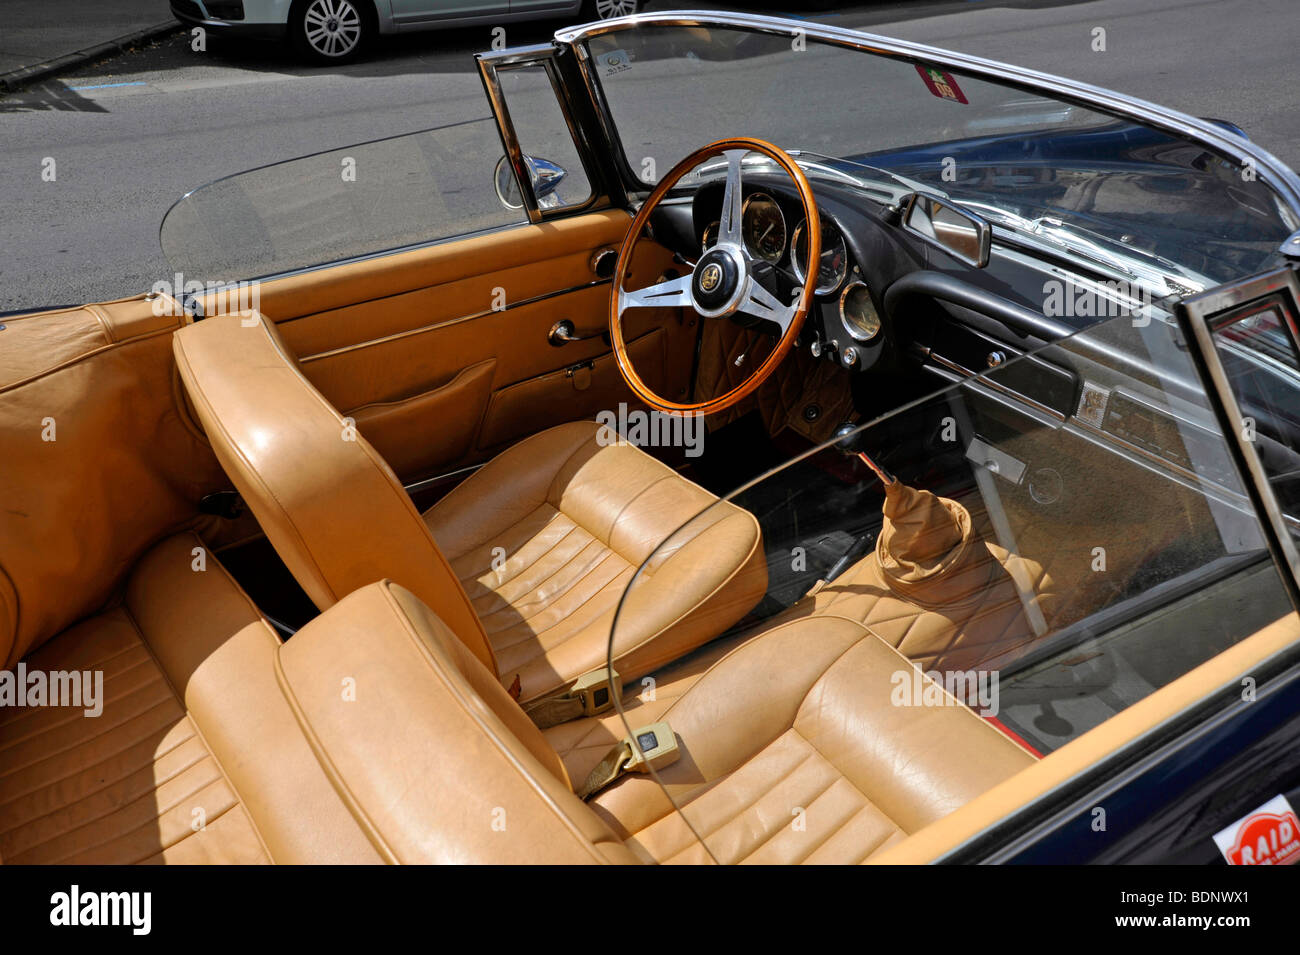 Interior of classic Alfa Romeo convertible sports car Stock Photo